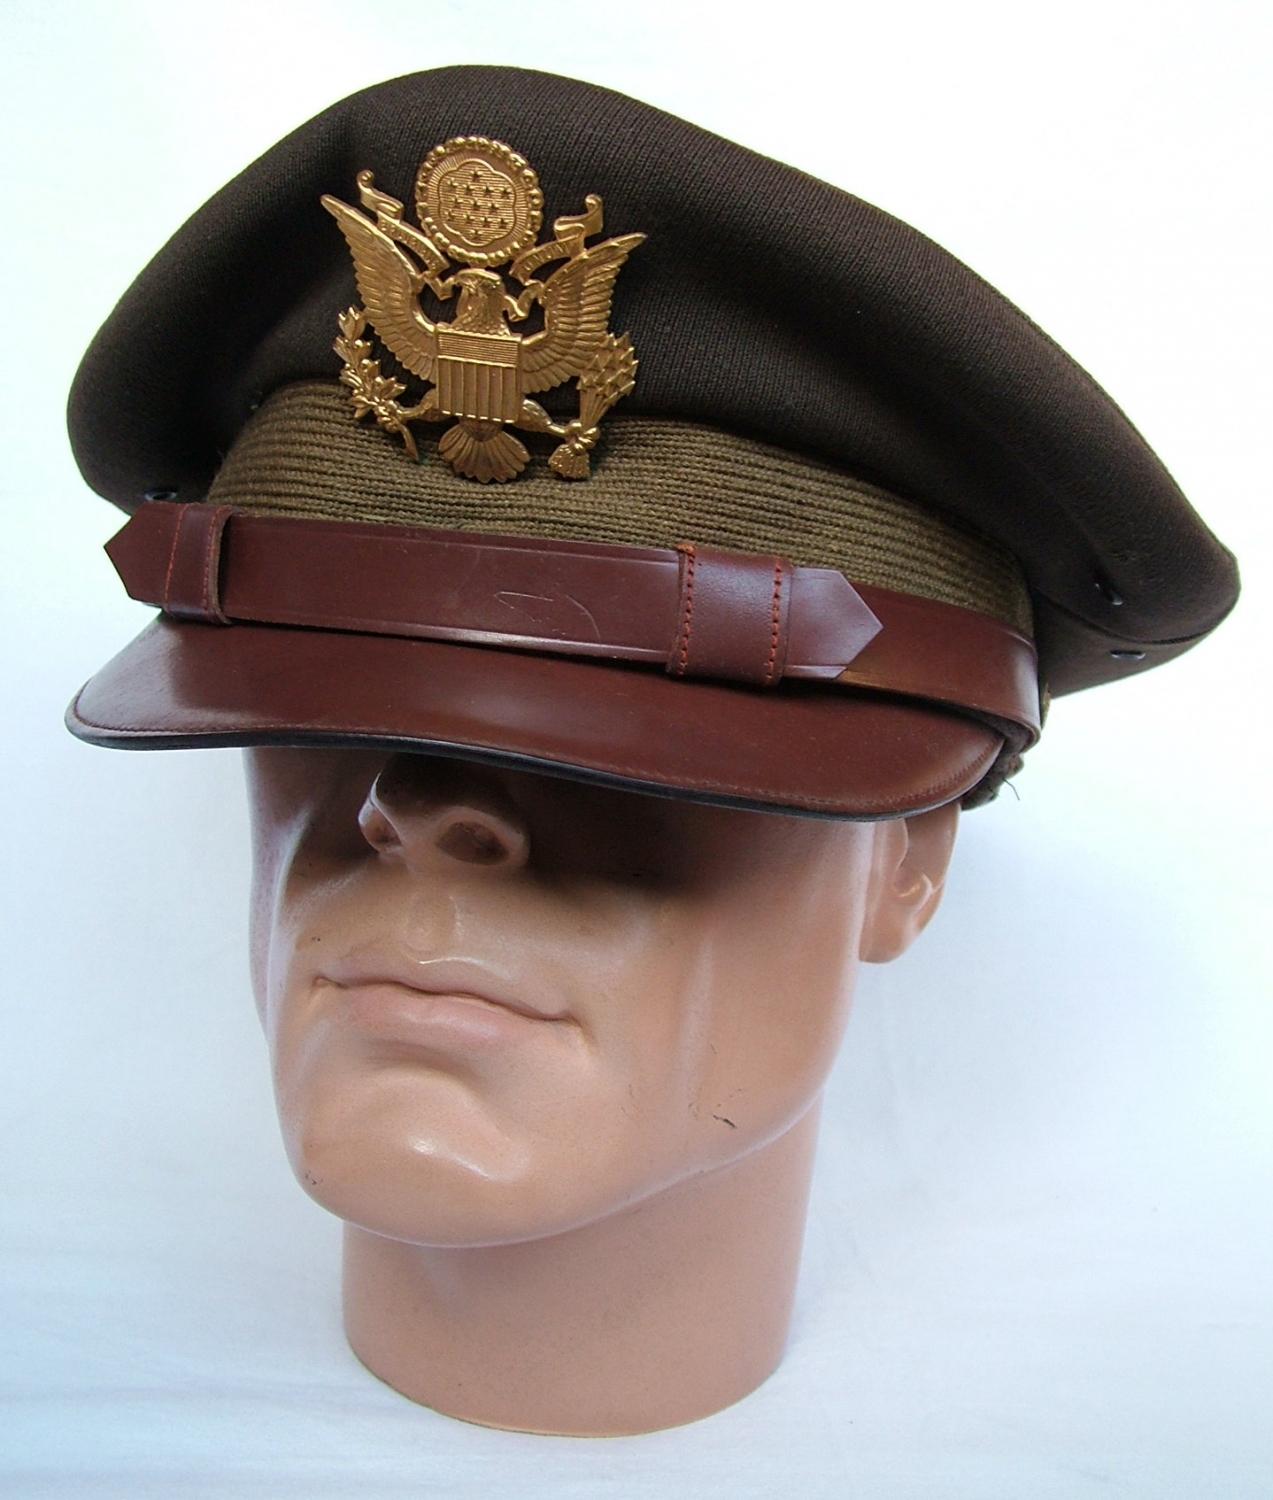 USAAF Officers' 'Chocolate' Visor Cap